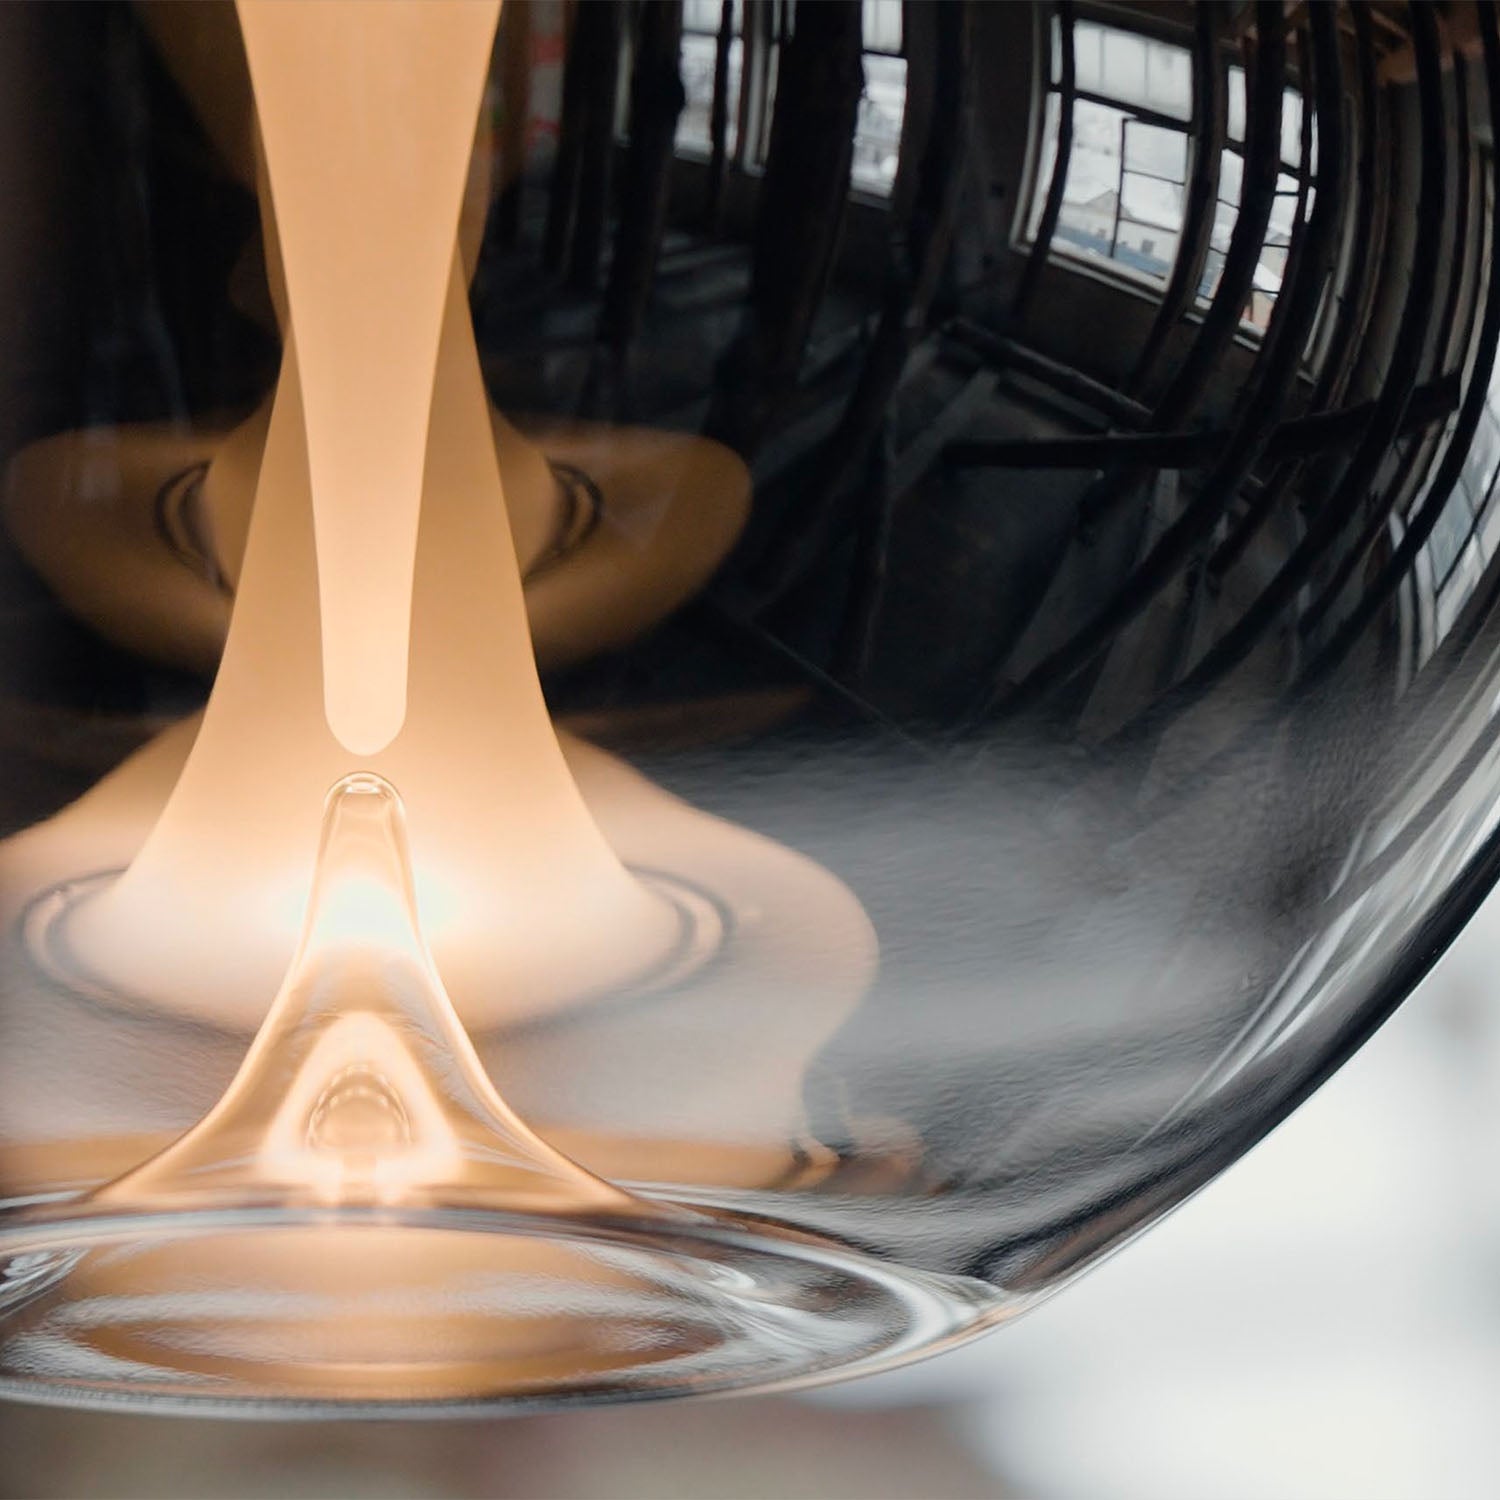 BOND - Luxurious pendant lamp, nanocoated glass drop